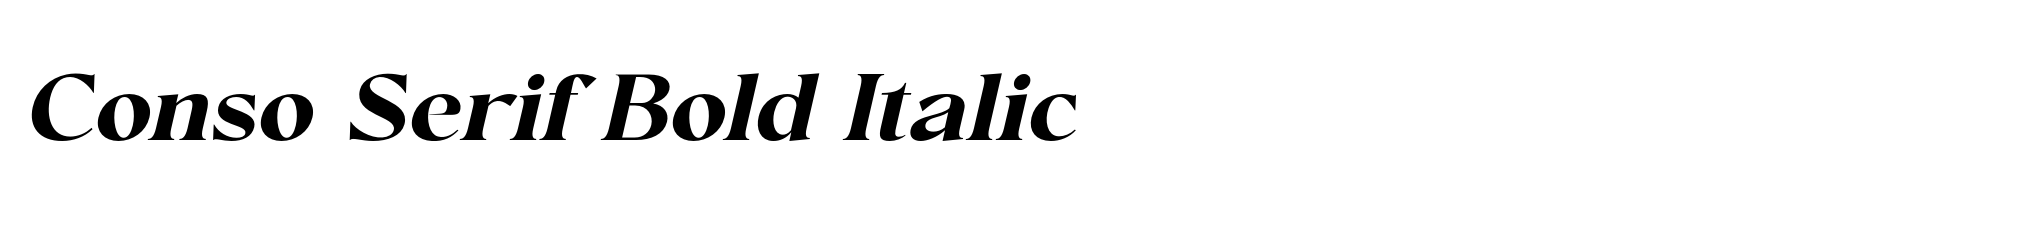 Conso Serif Bold Italic image